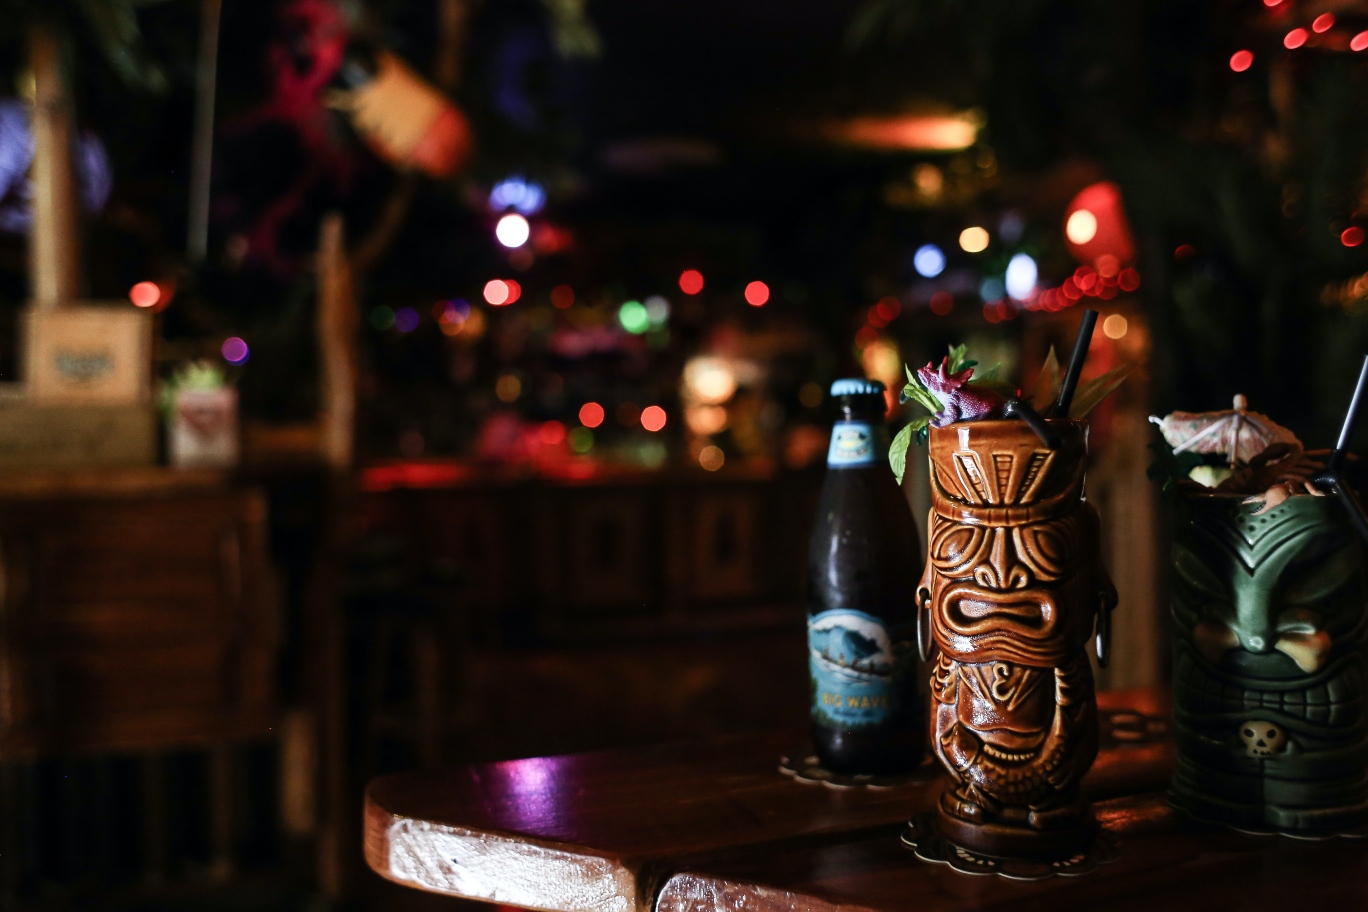 Tiki mug and beers in a tiki bar-themed man cave